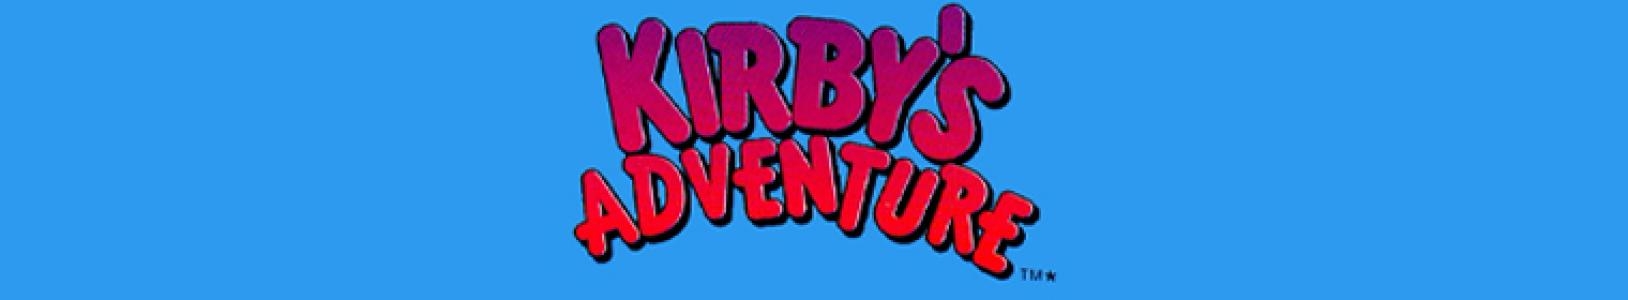 Kirby's Adventure banner